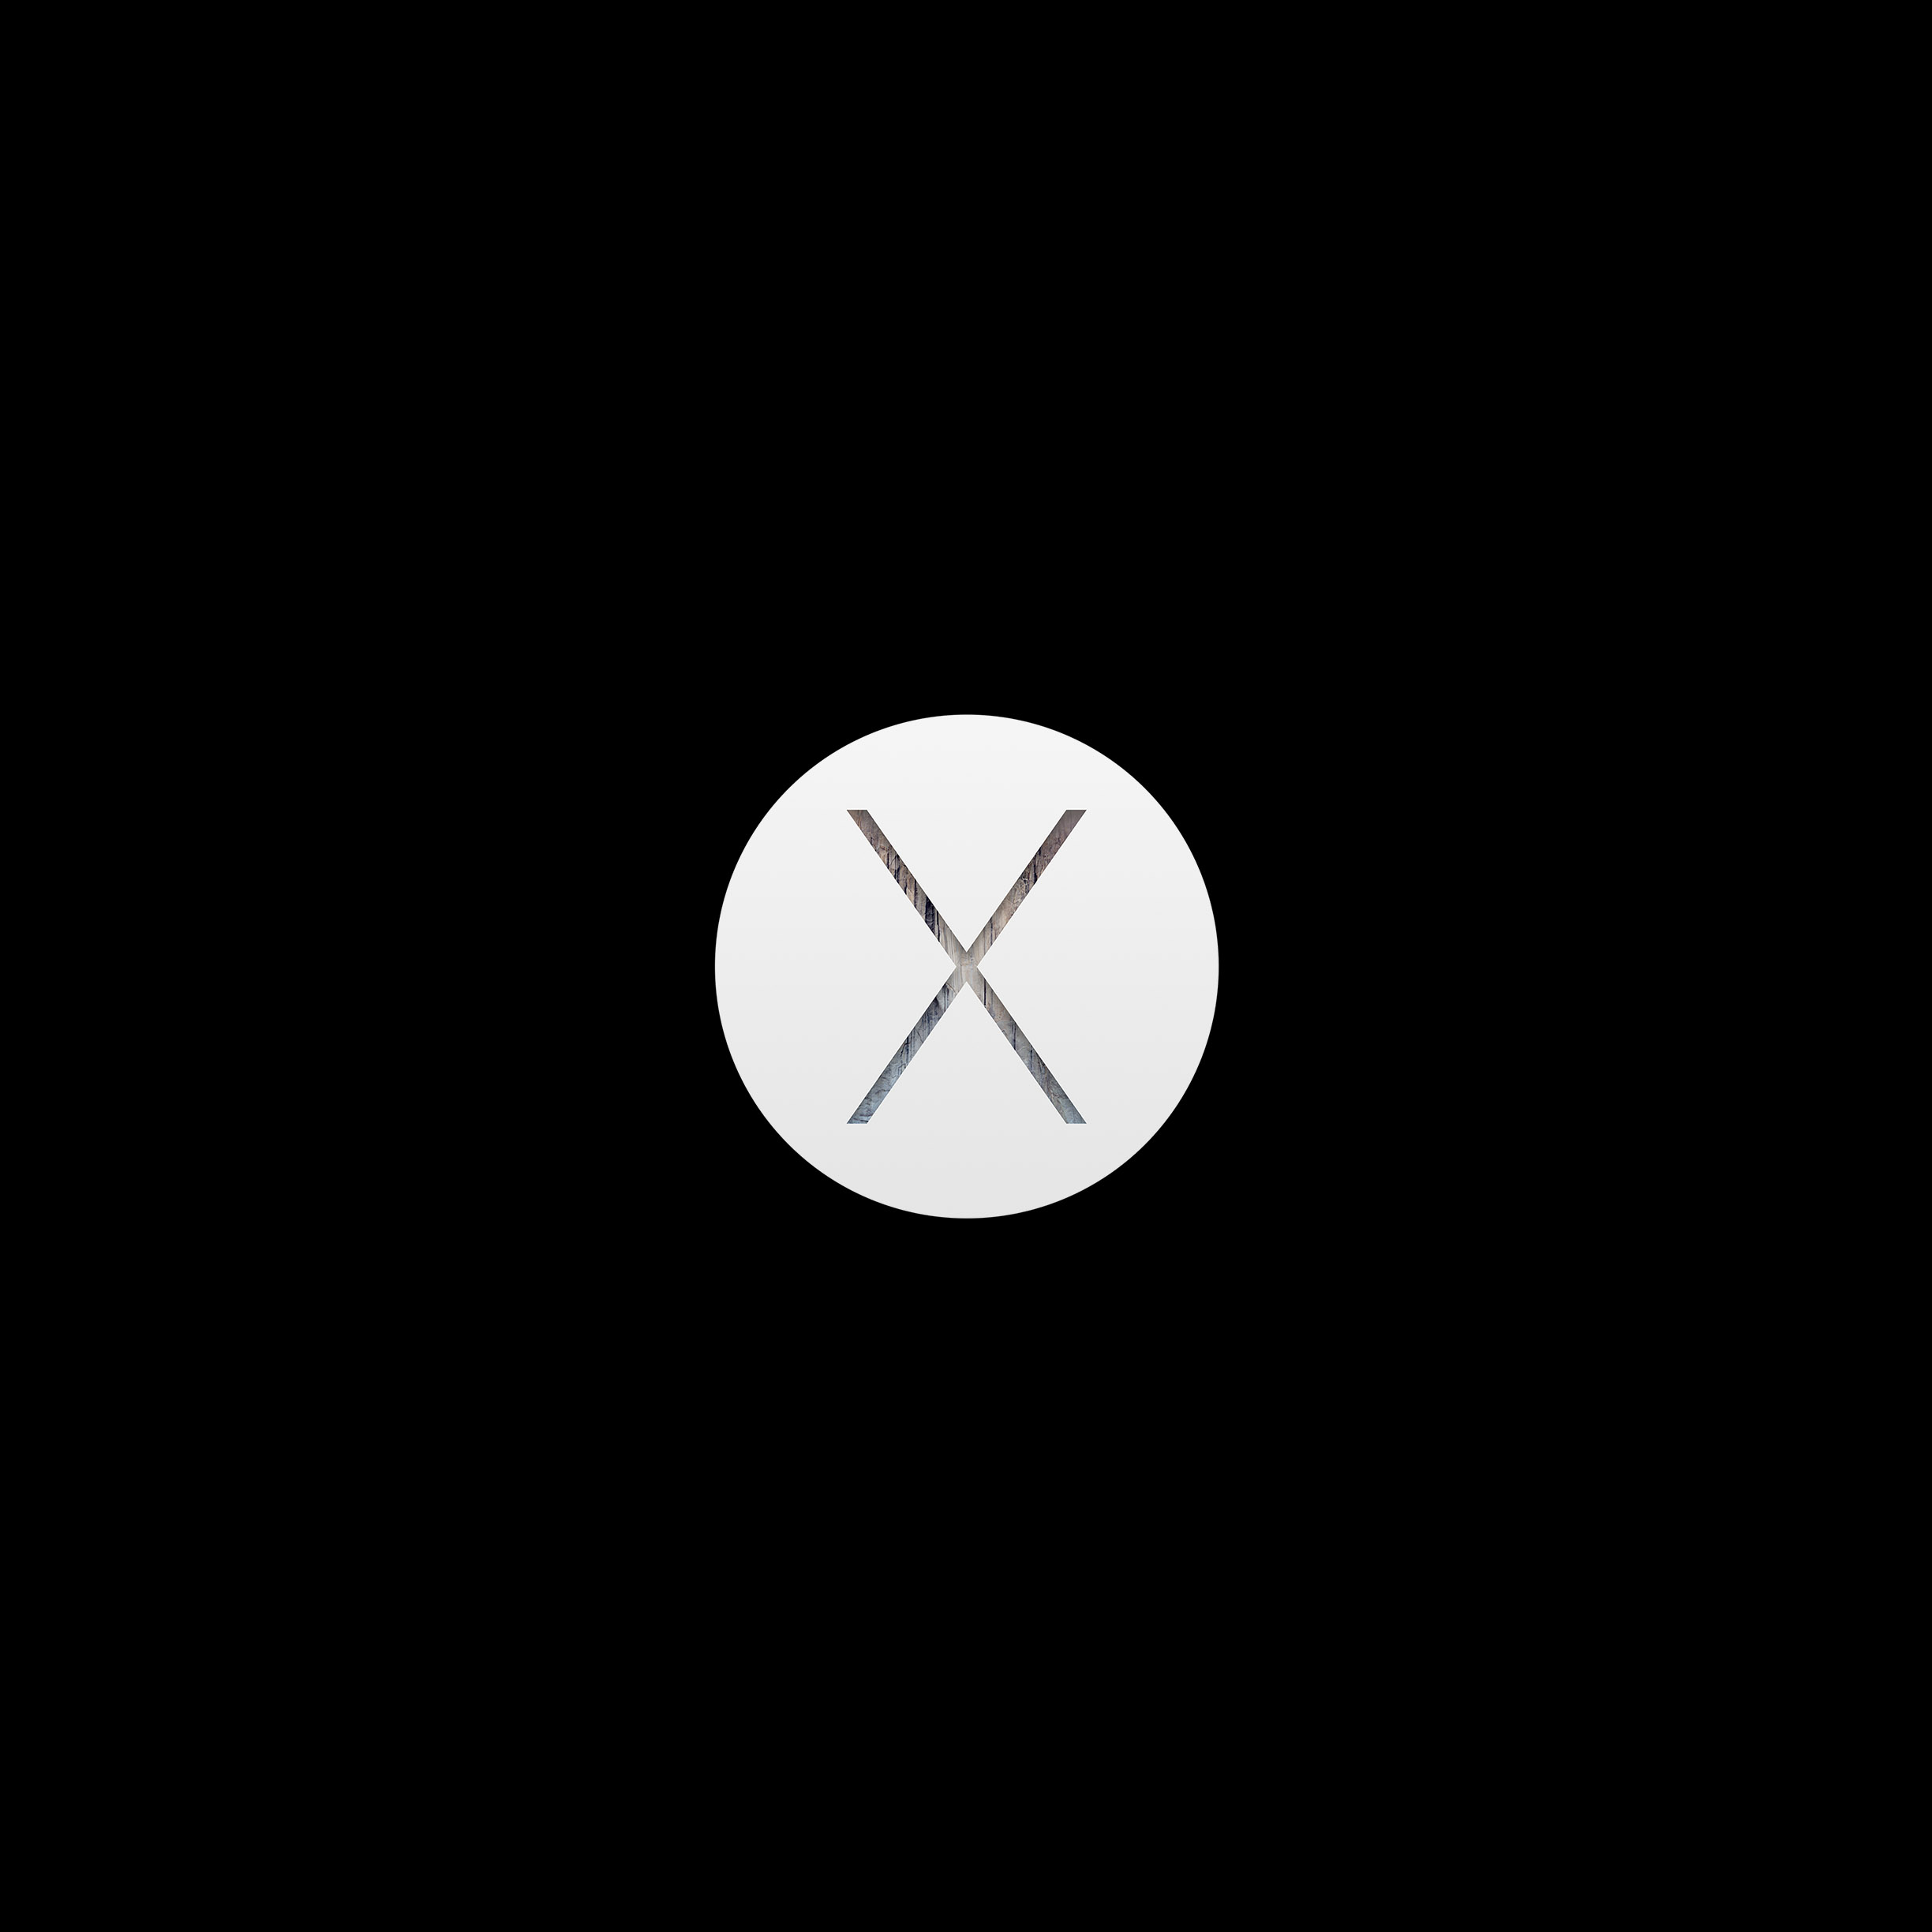 Ios7 Os X Yosemite Mac Parallax HD iPhone iPad Wallpaper